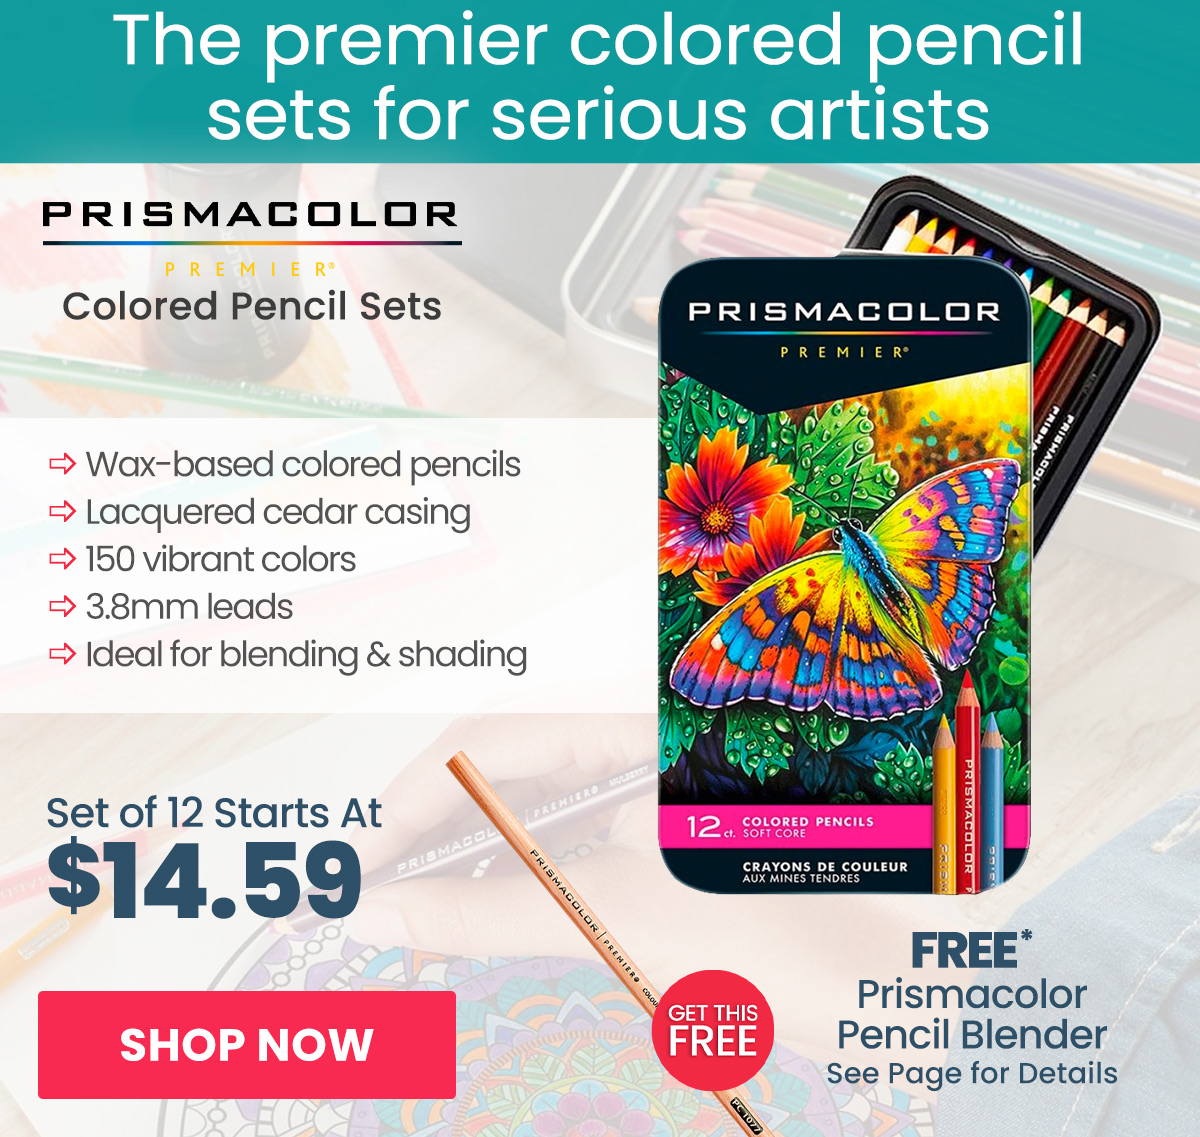 Prismacolor Premier Colored Pencil Sets - Free Blender